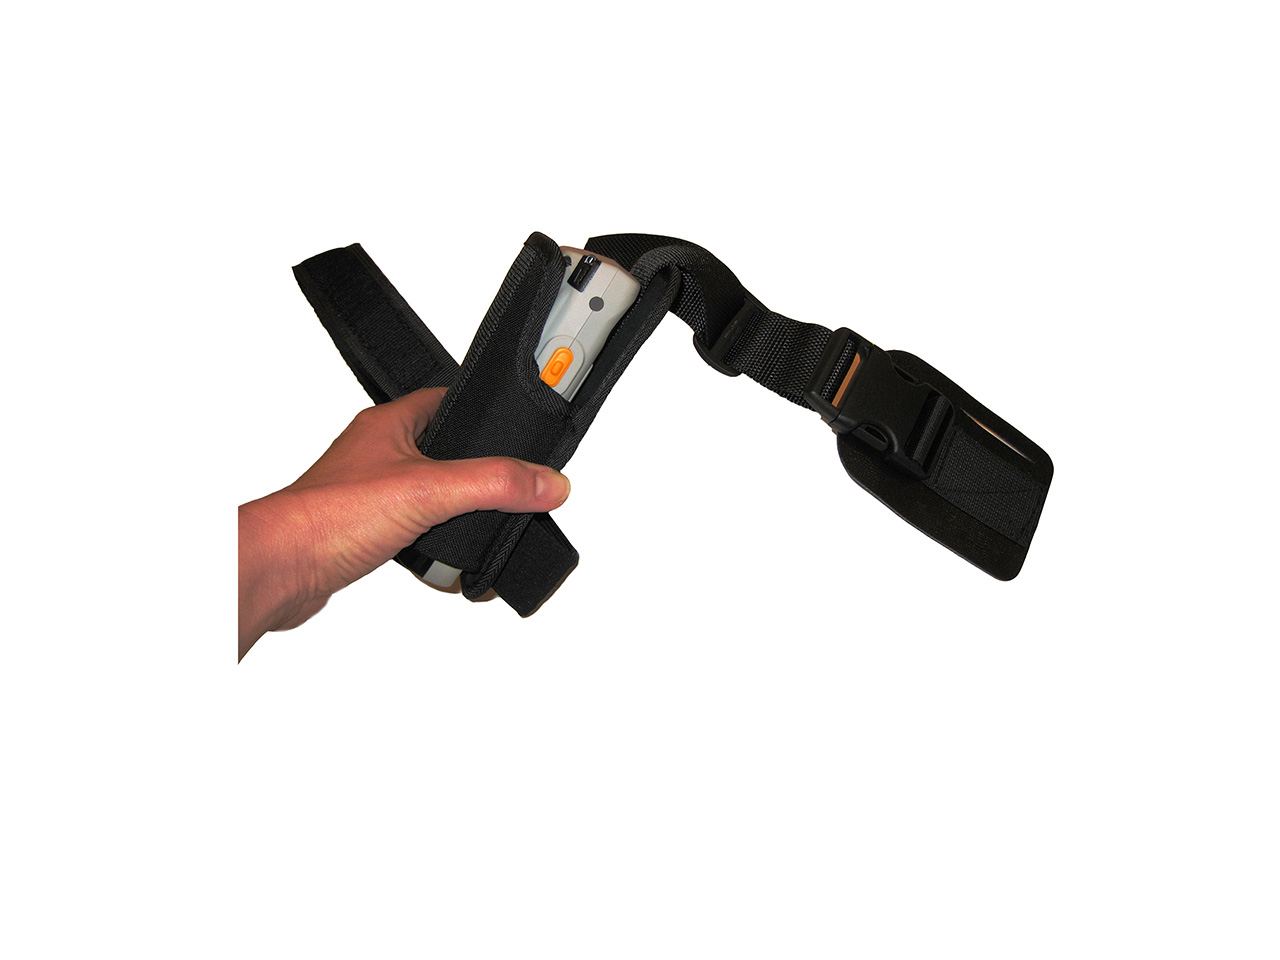 NX3-1027 Leg holster Sacci in hand (72dpi).jpg